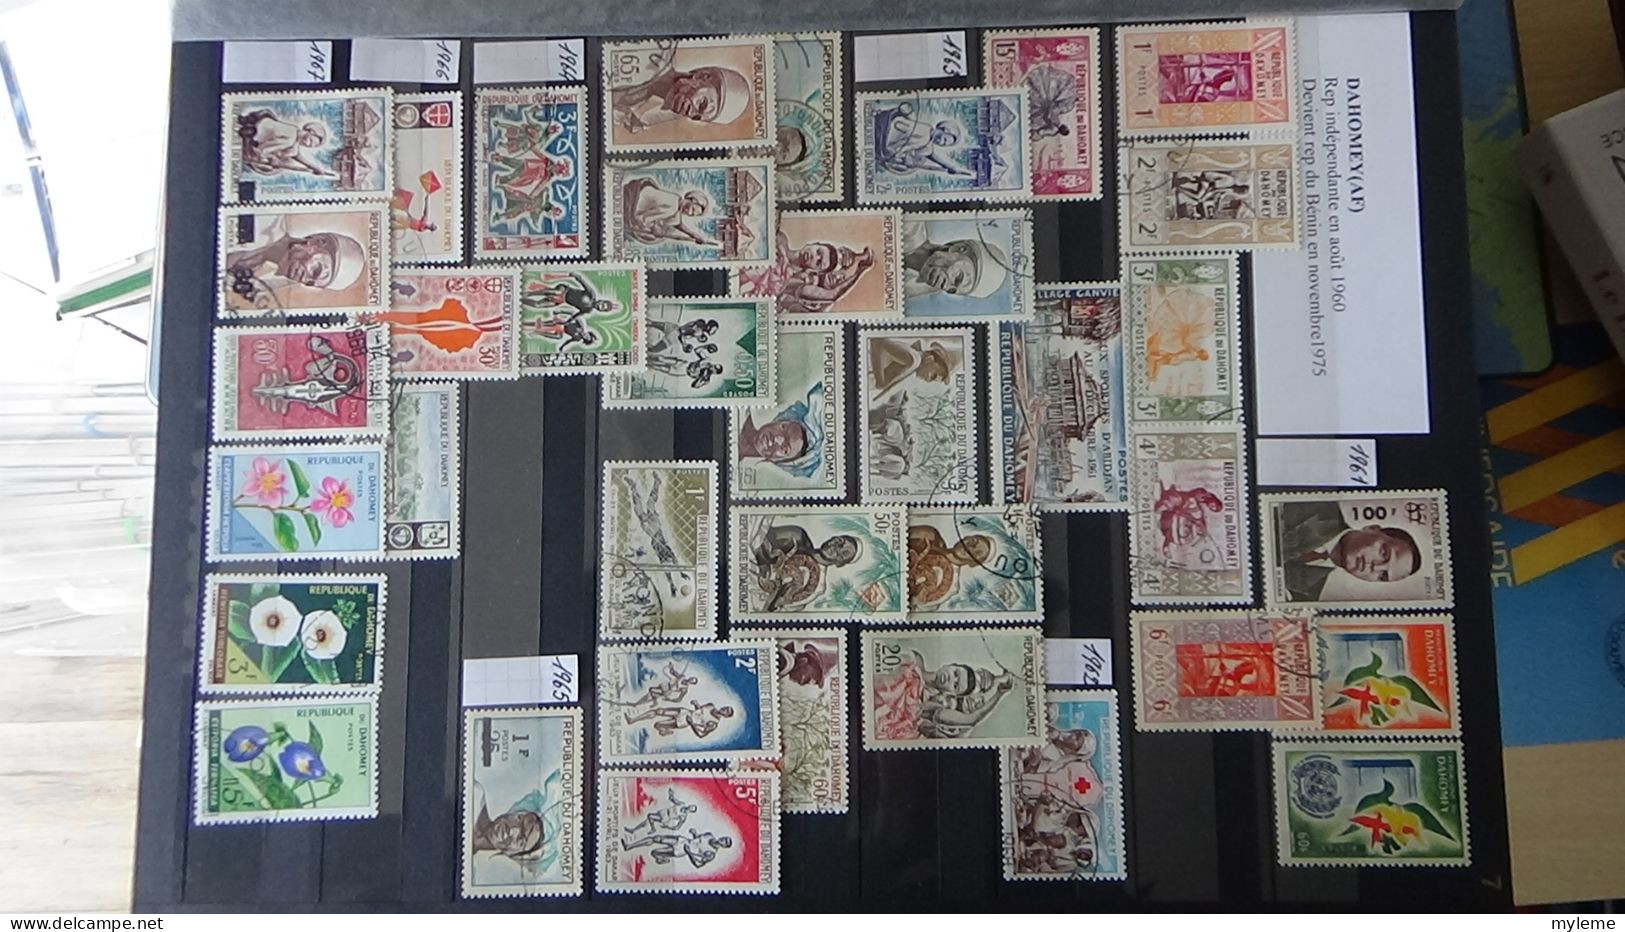 BG1 Ensemble de timbres de divers pays + 10 timbres Italie N° 2370Aa ** Cote 2500 euros. A saisir !!!